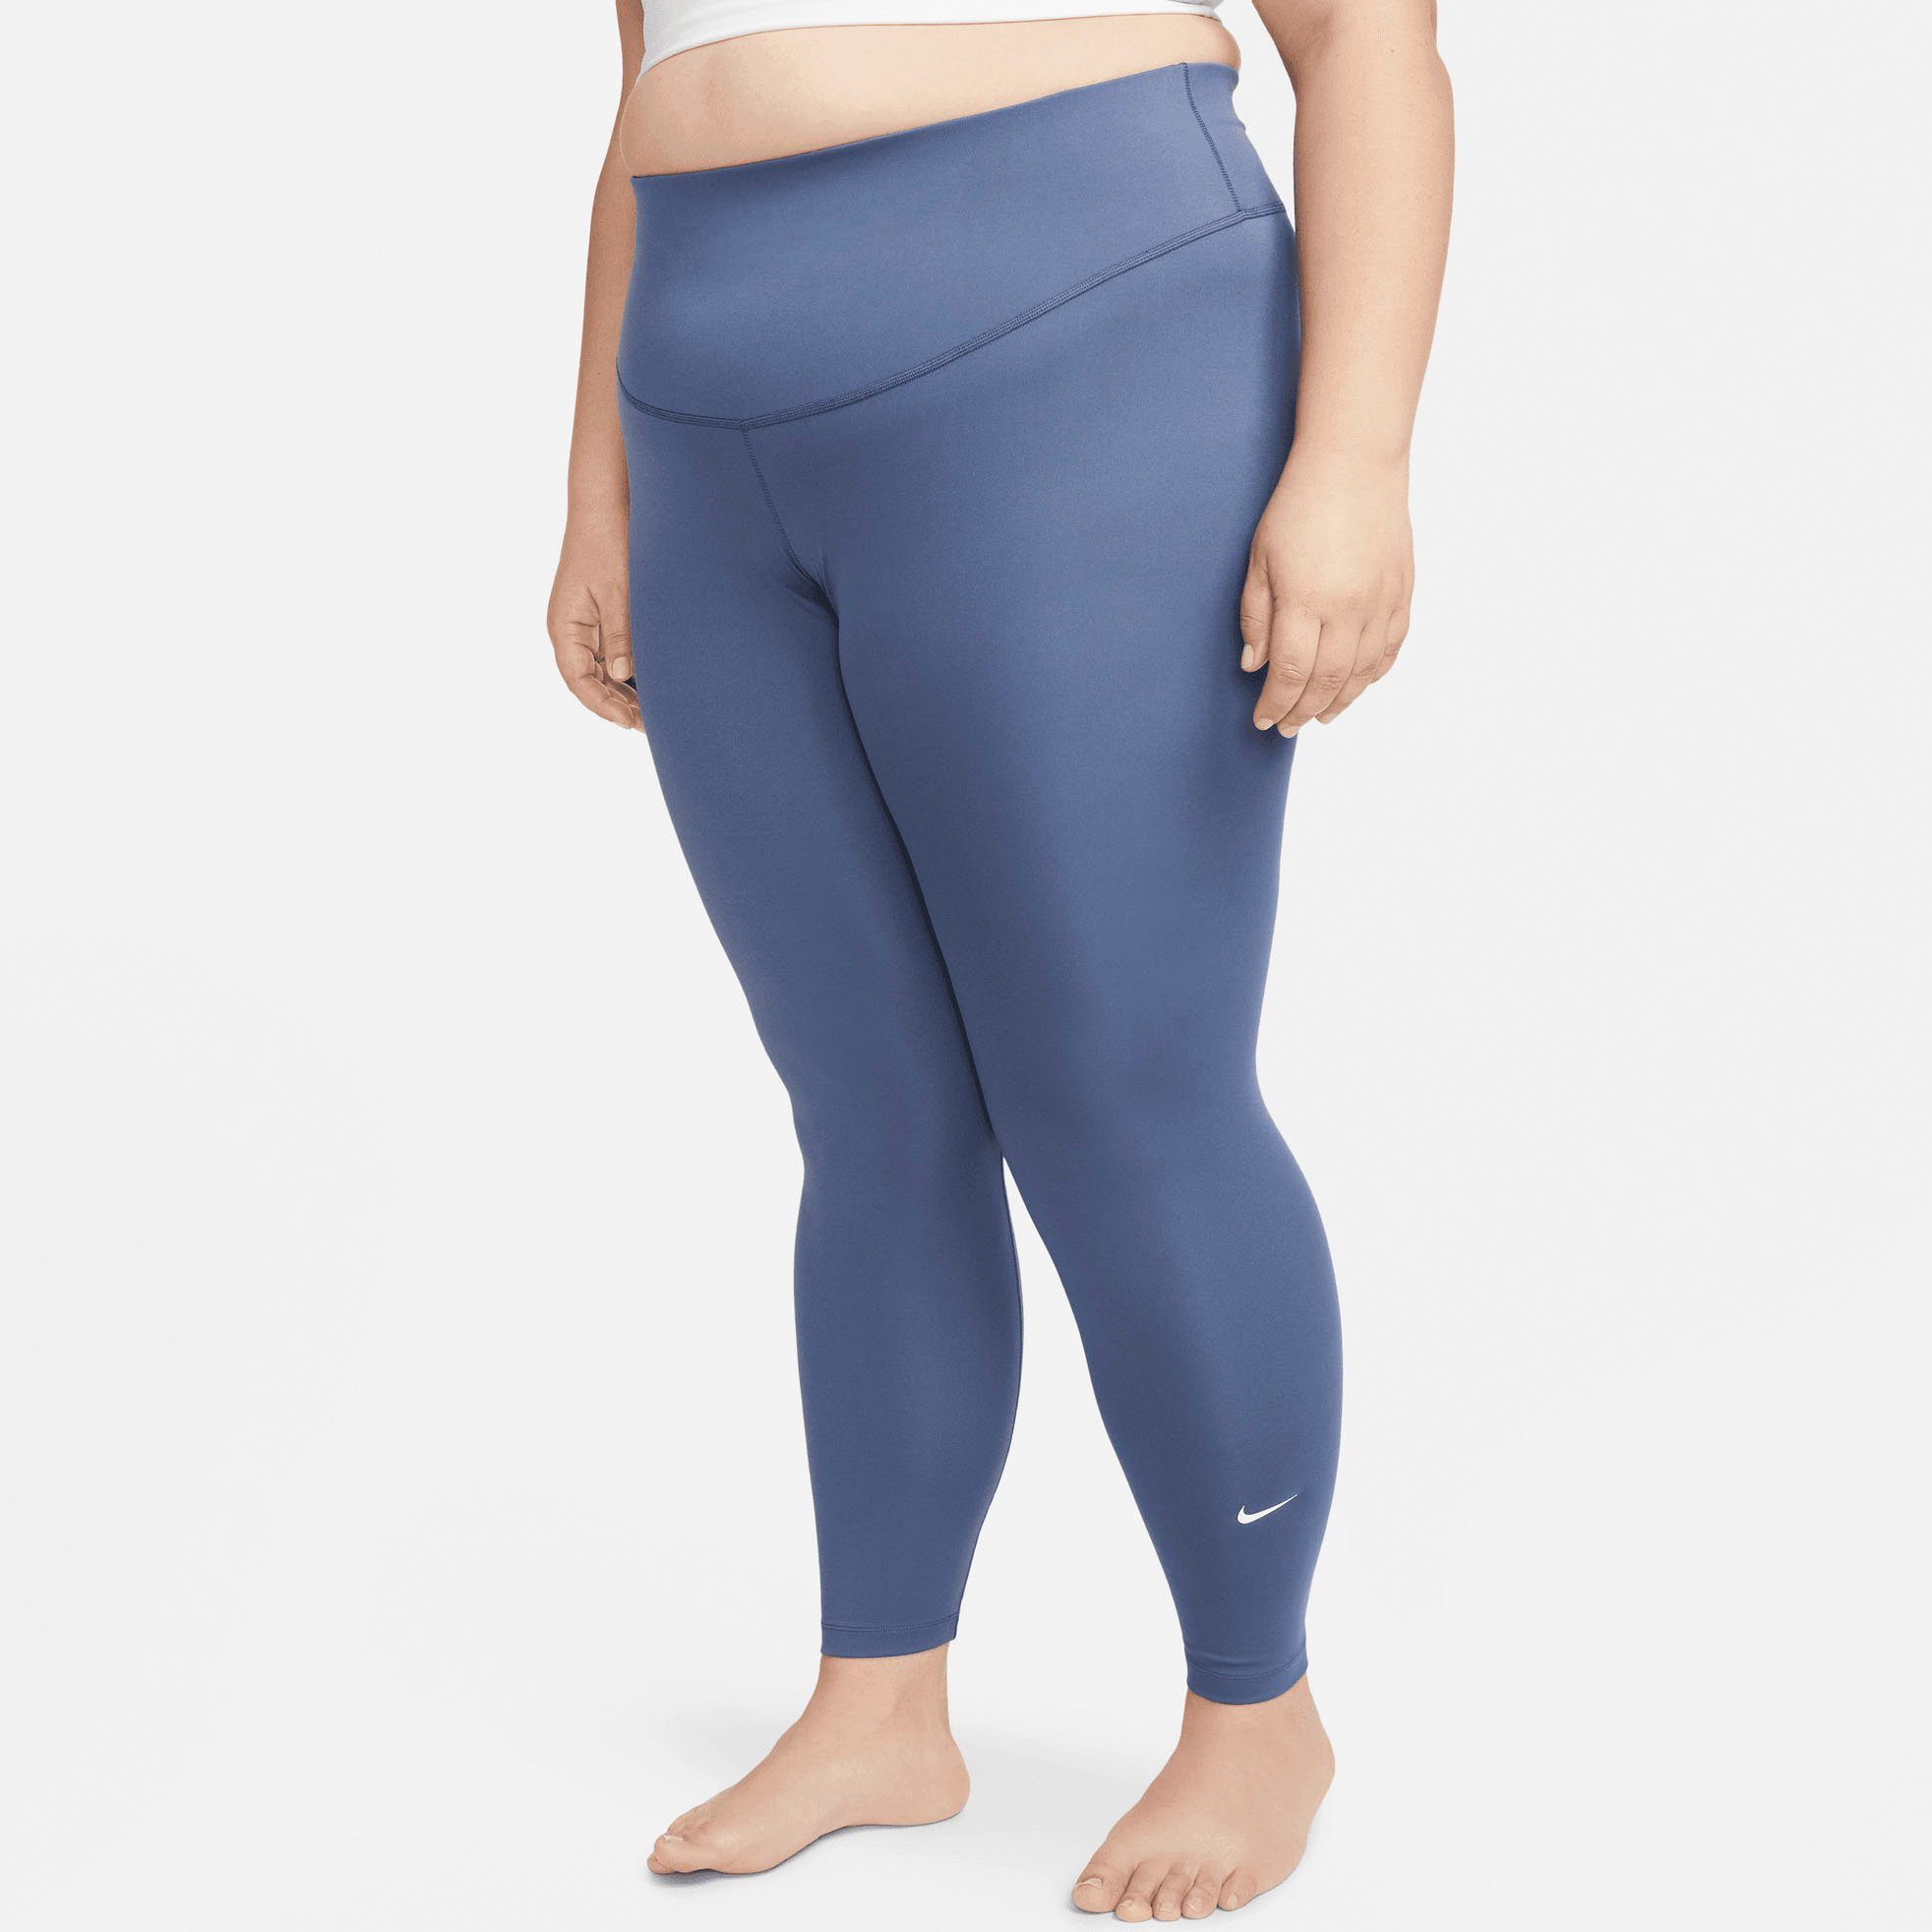 Mid-Rise (Plus Nike One blau Leggings Women's Trainingstights Size)